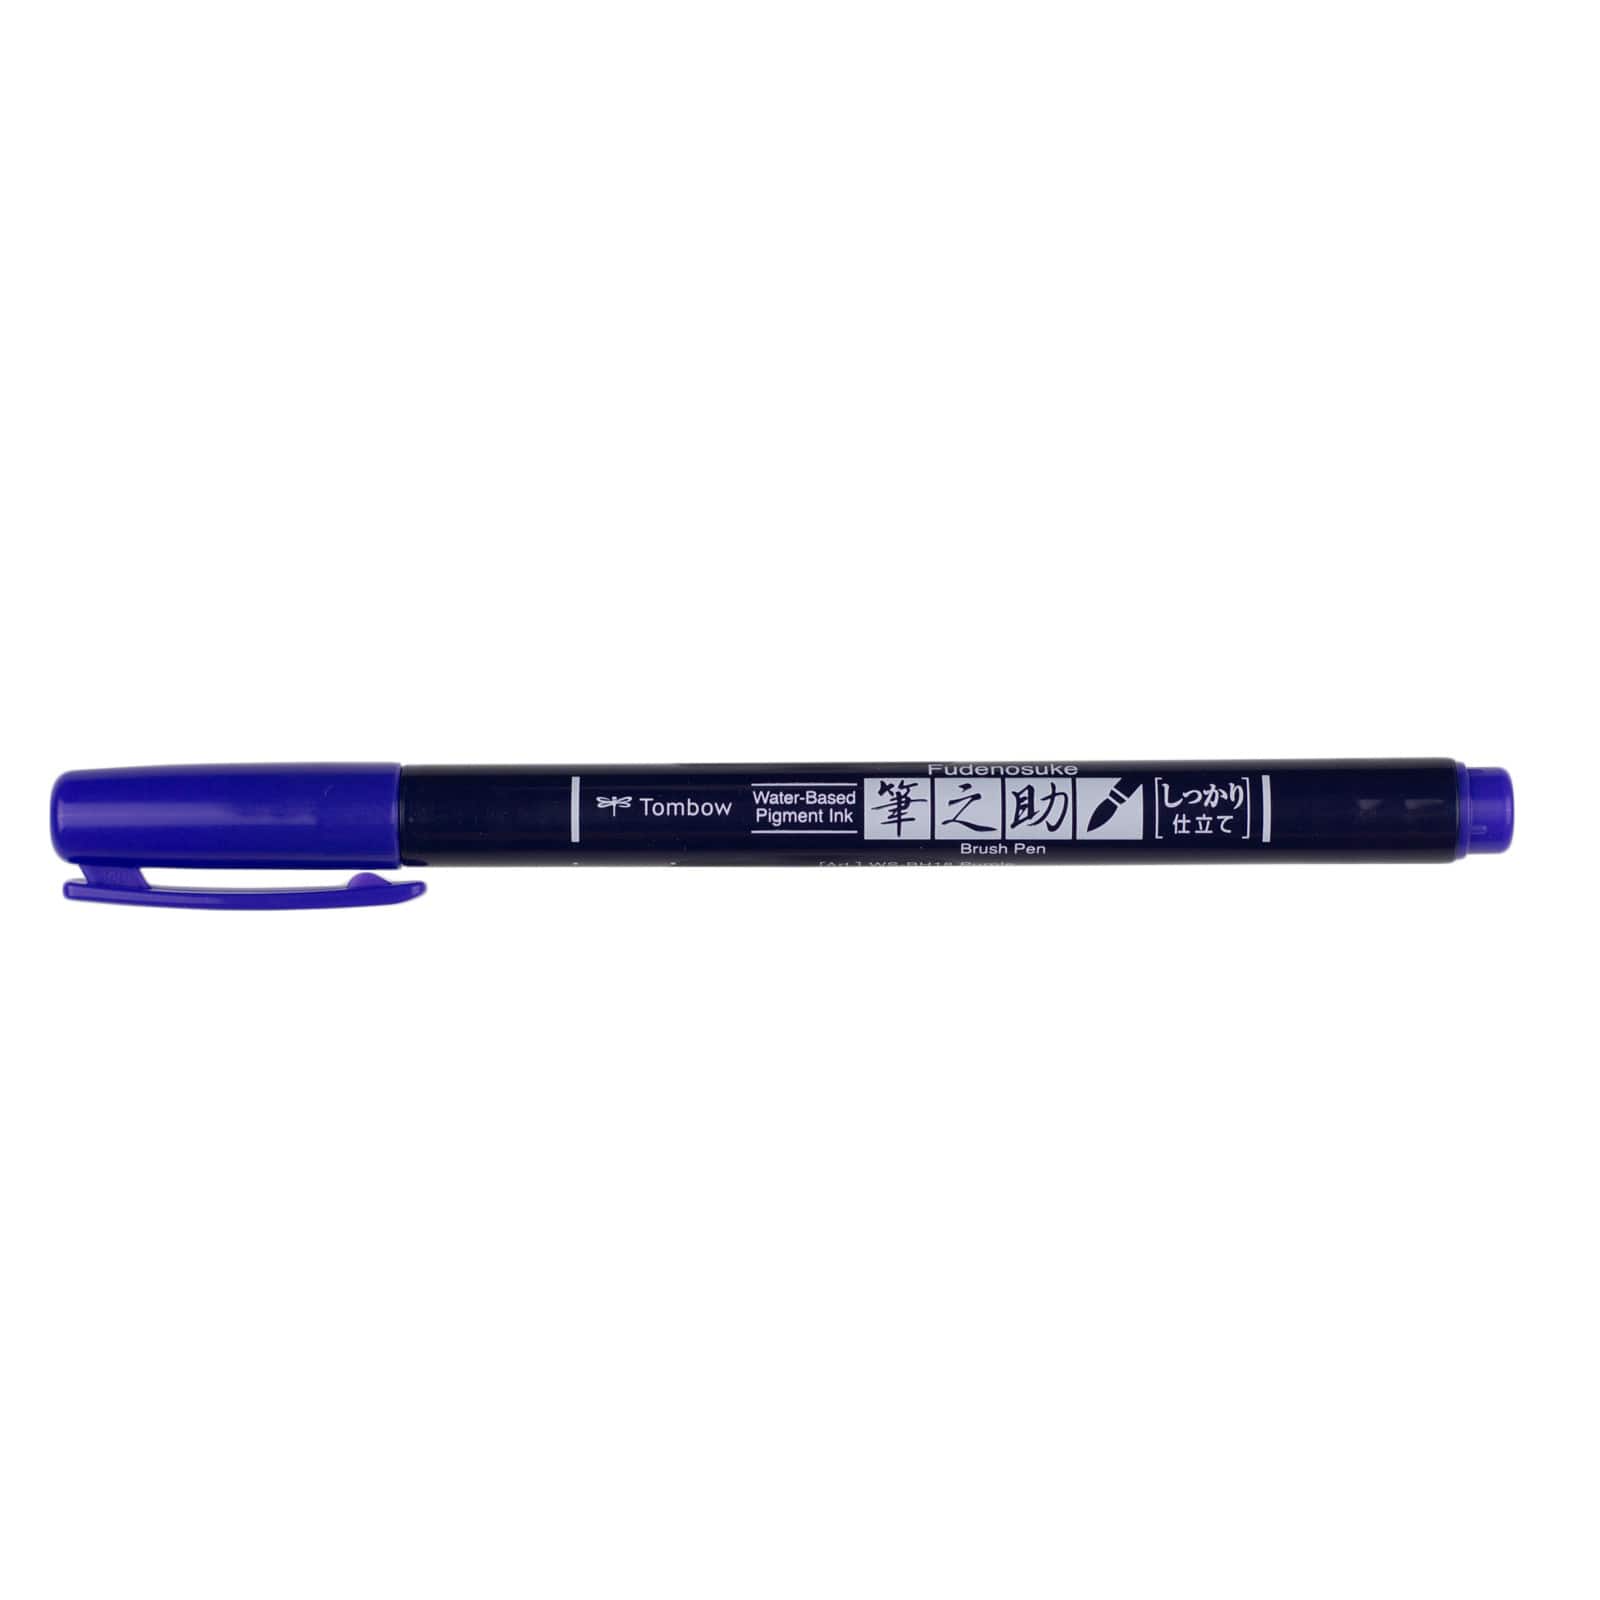 Tombow Fudenosuke Brush Pen - Hard - Purple